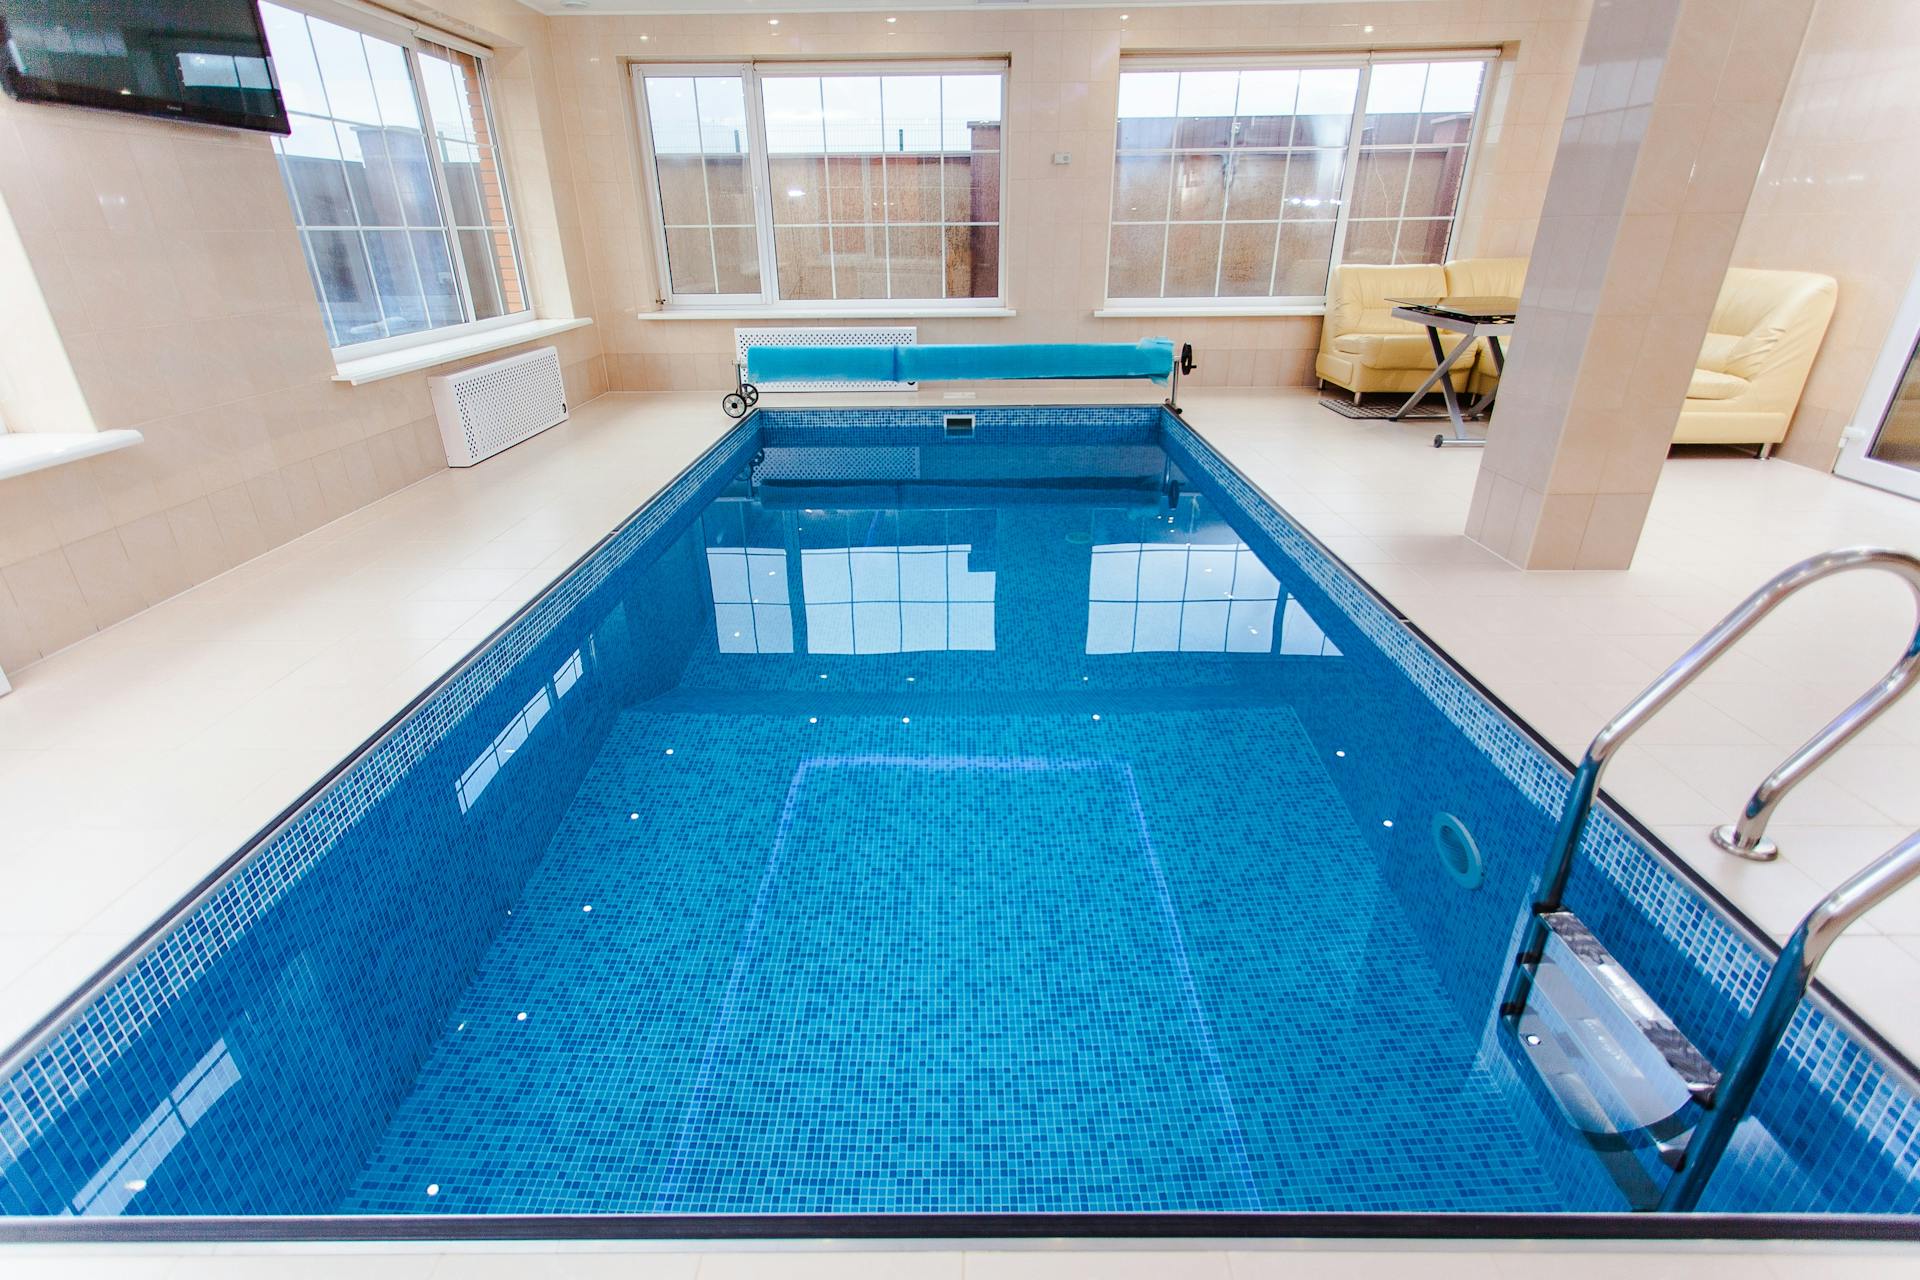 Une piscine intérieure | Source : Pexels